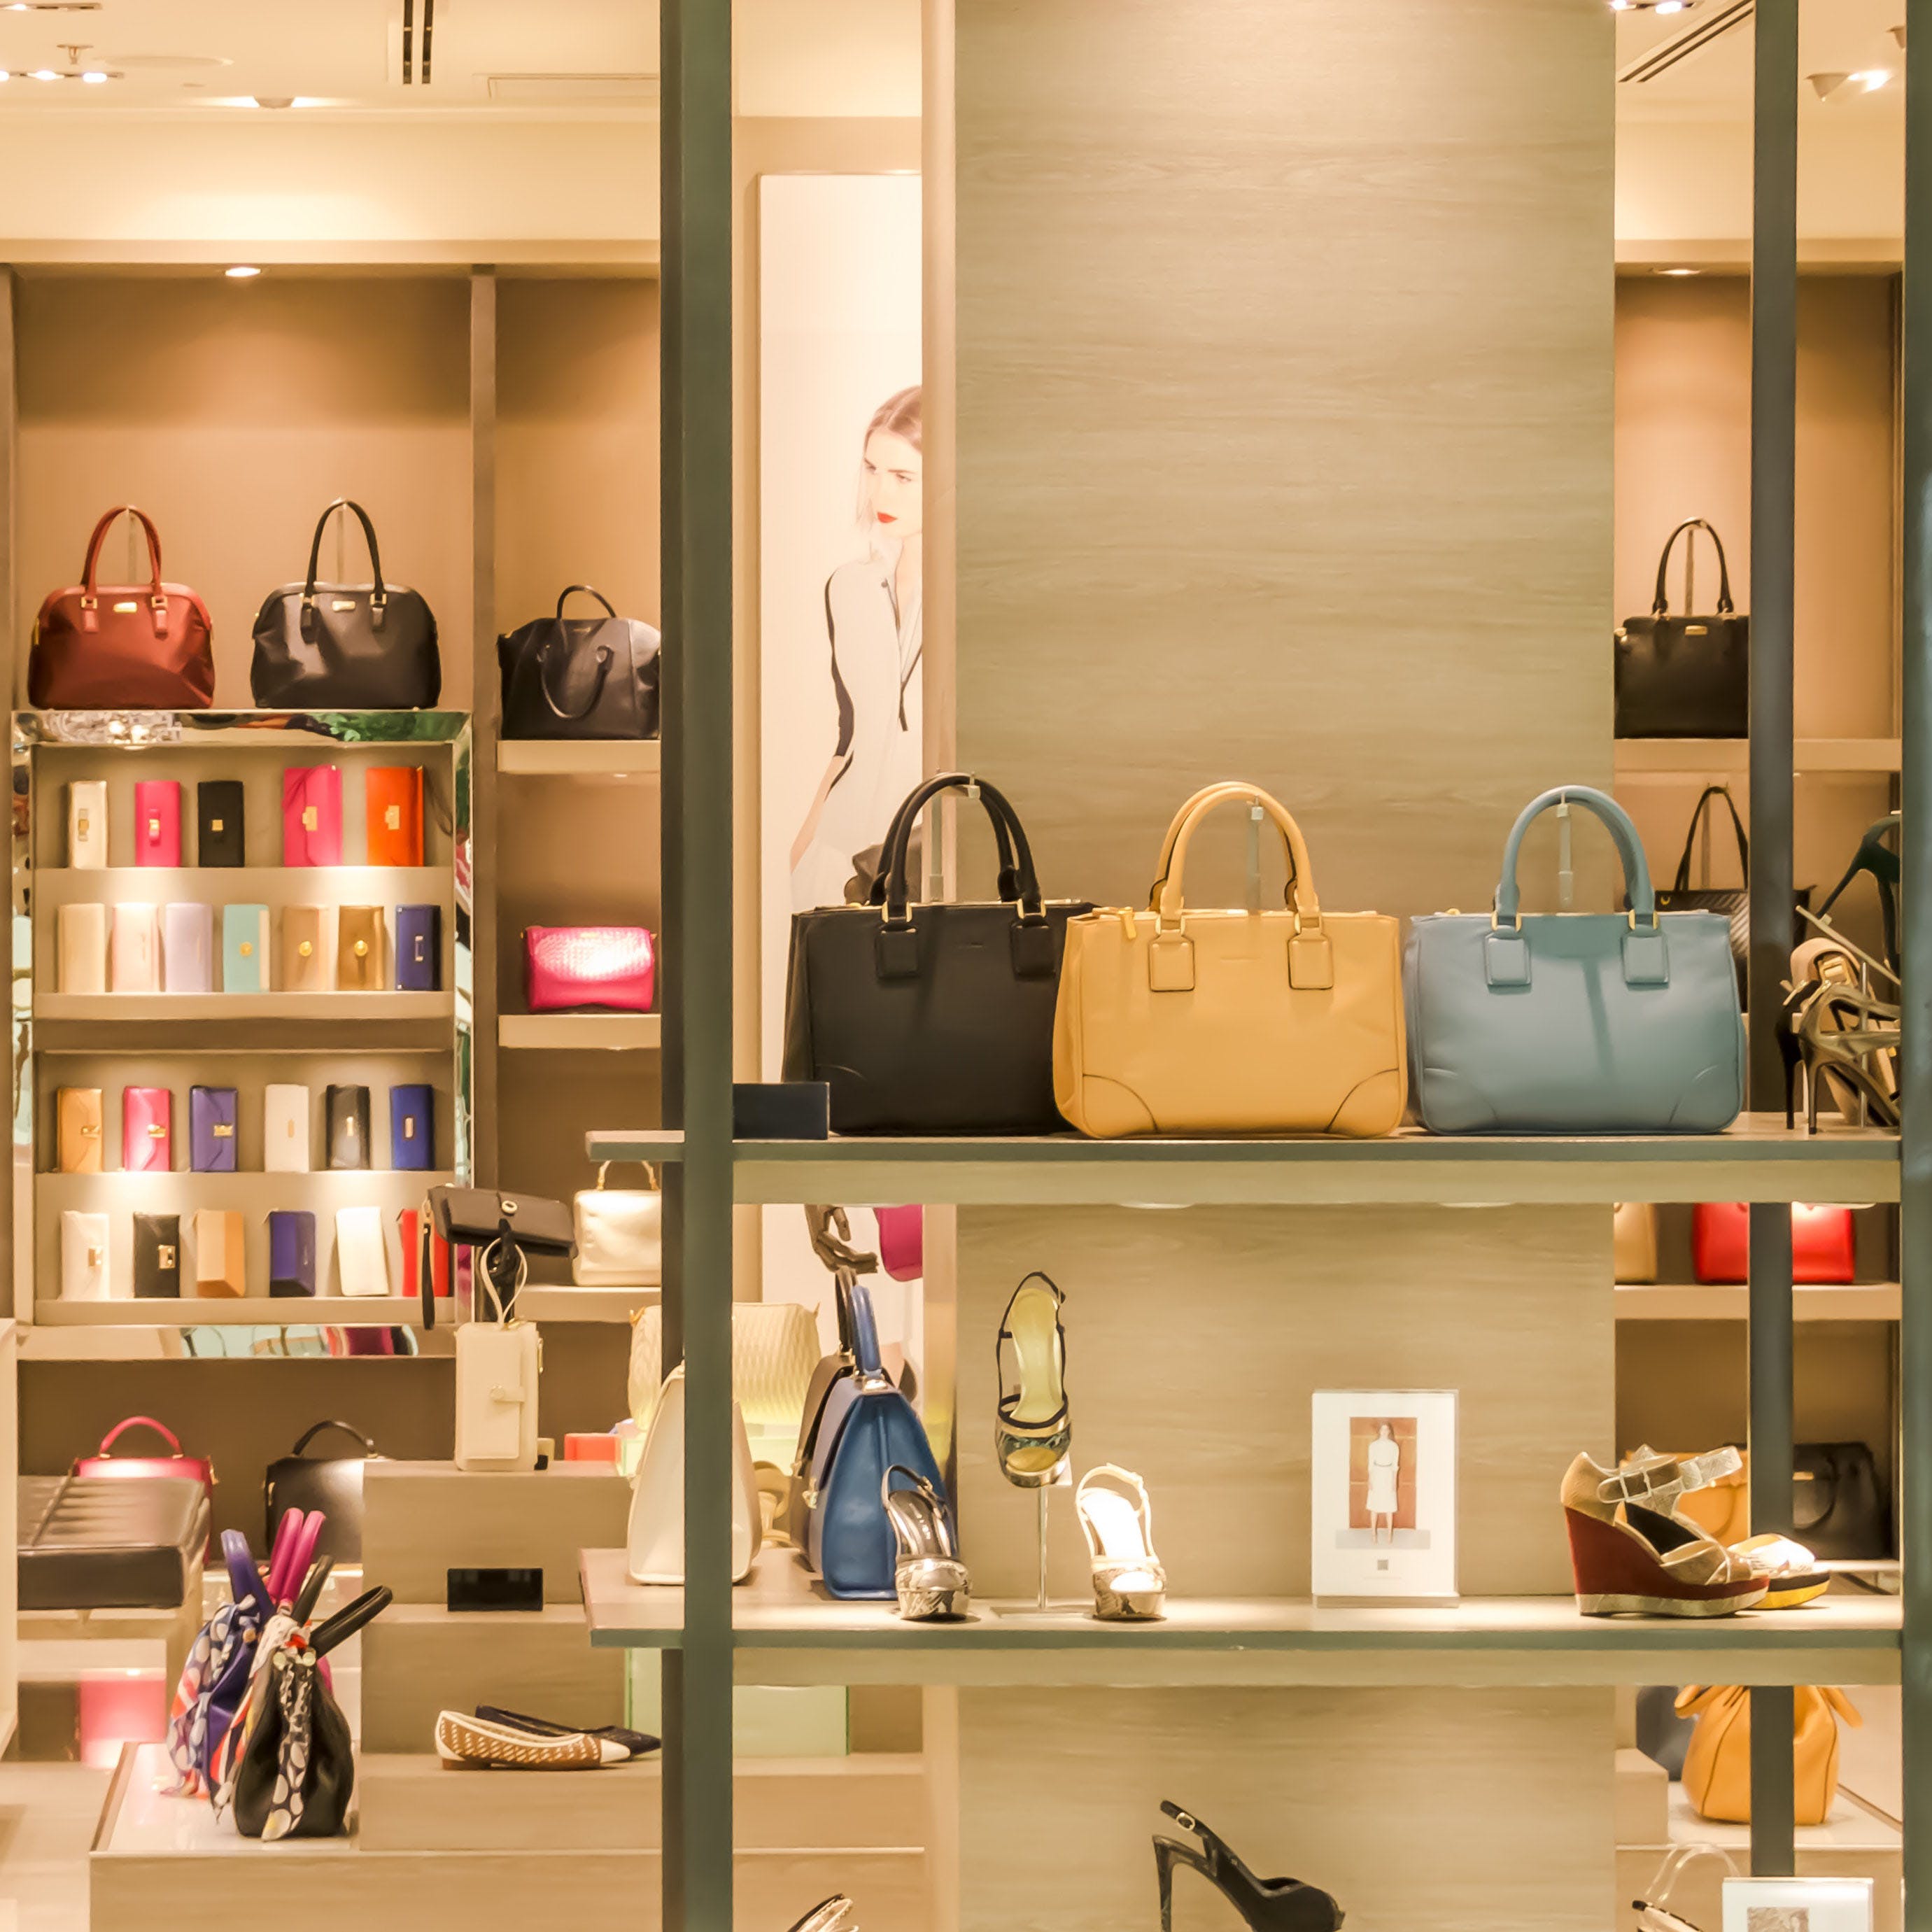 Shelf,Handbag,Building,Retail,Bag,Boutique,Furniture,Shelving,Interior design,Outlet store